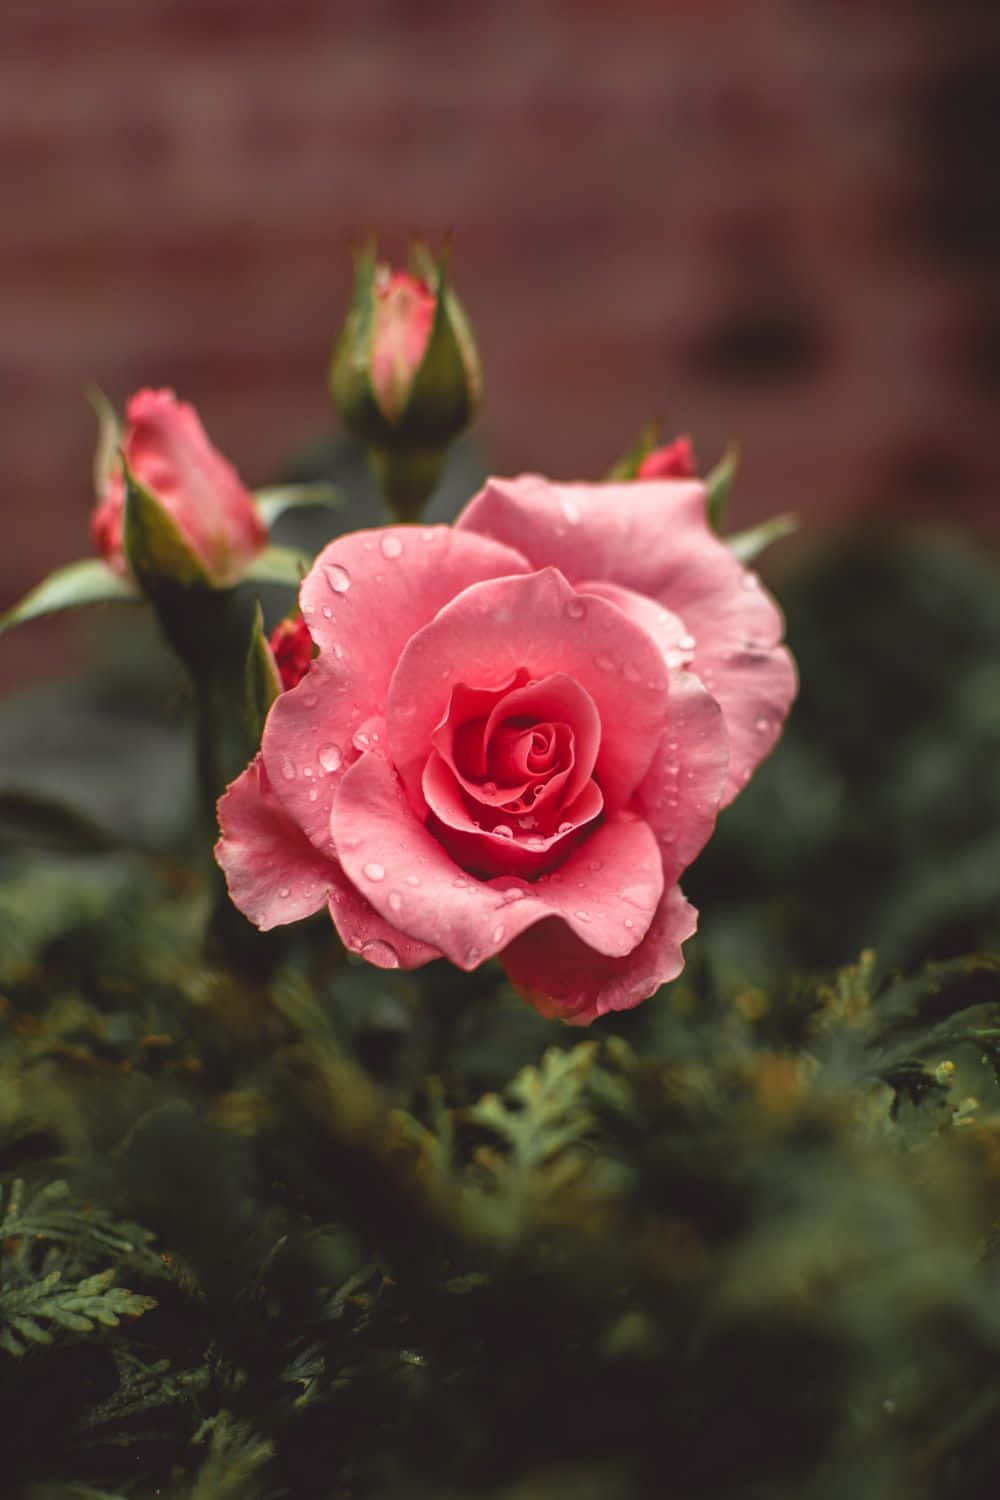 Apprezzatela Bellezza Delle Rose In Hd